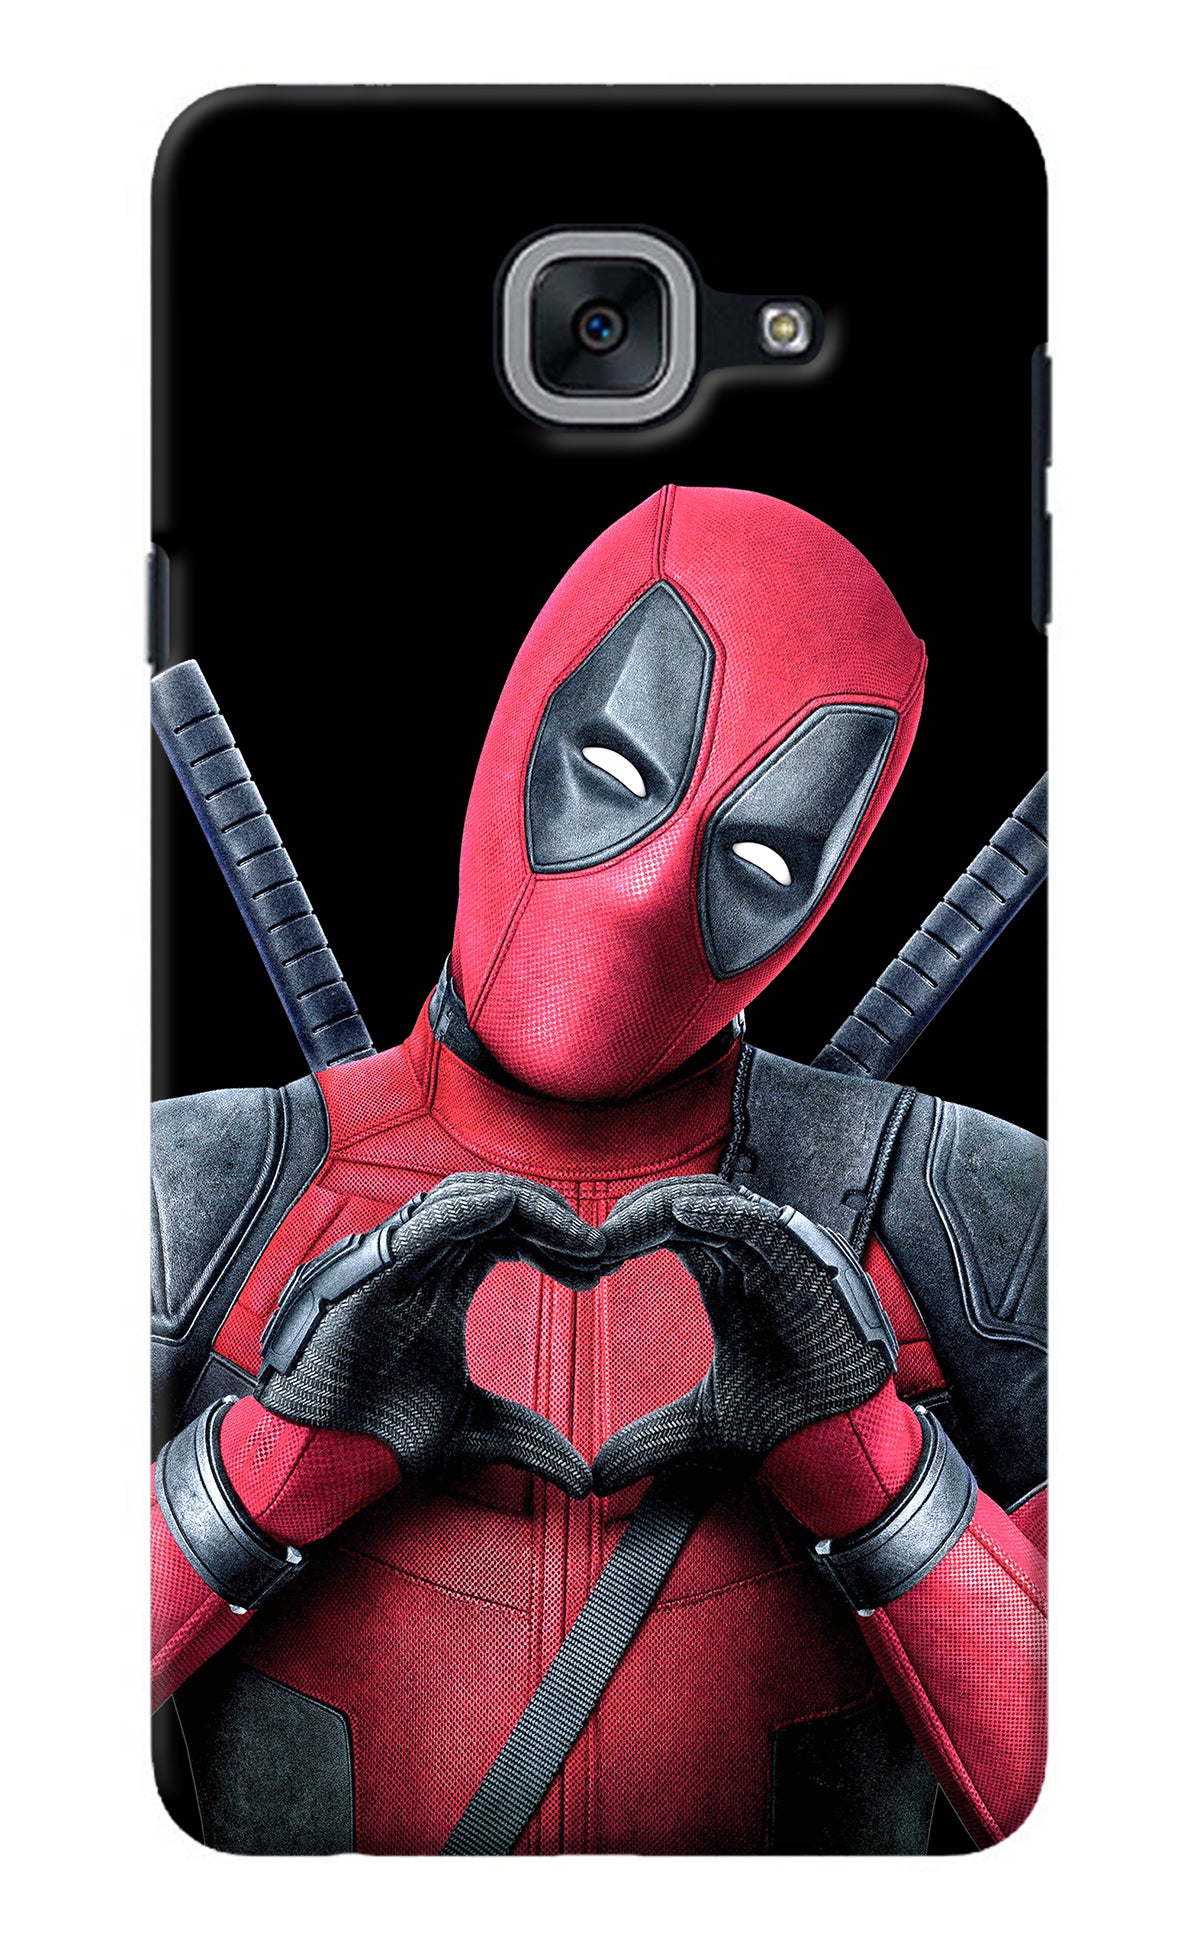 Deadpool Samsung J7 Max Back Cover